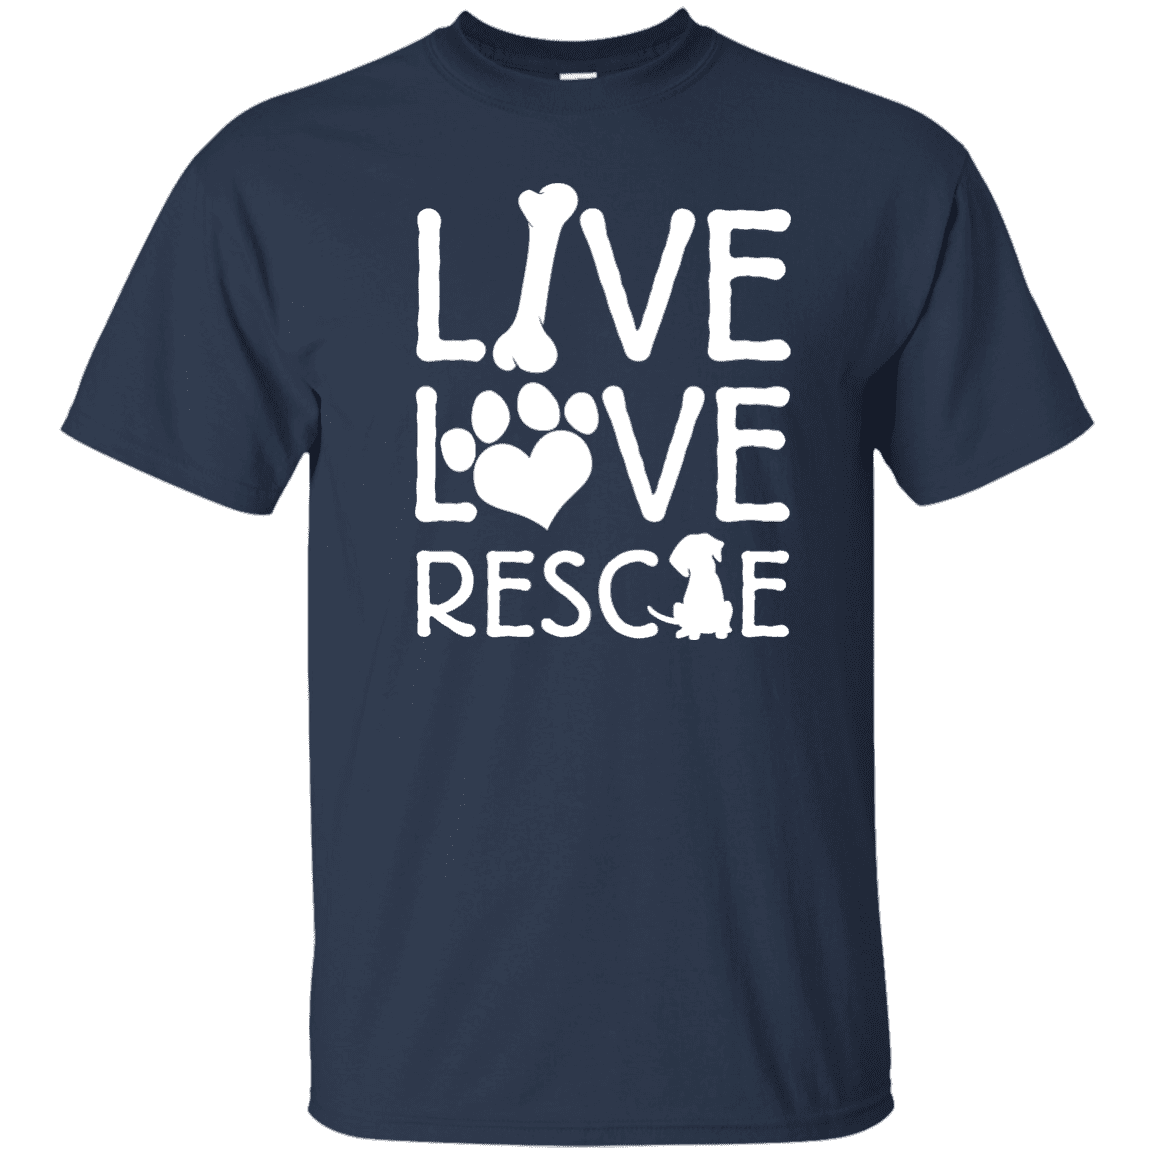 Live Love Rescue - T Shirt.